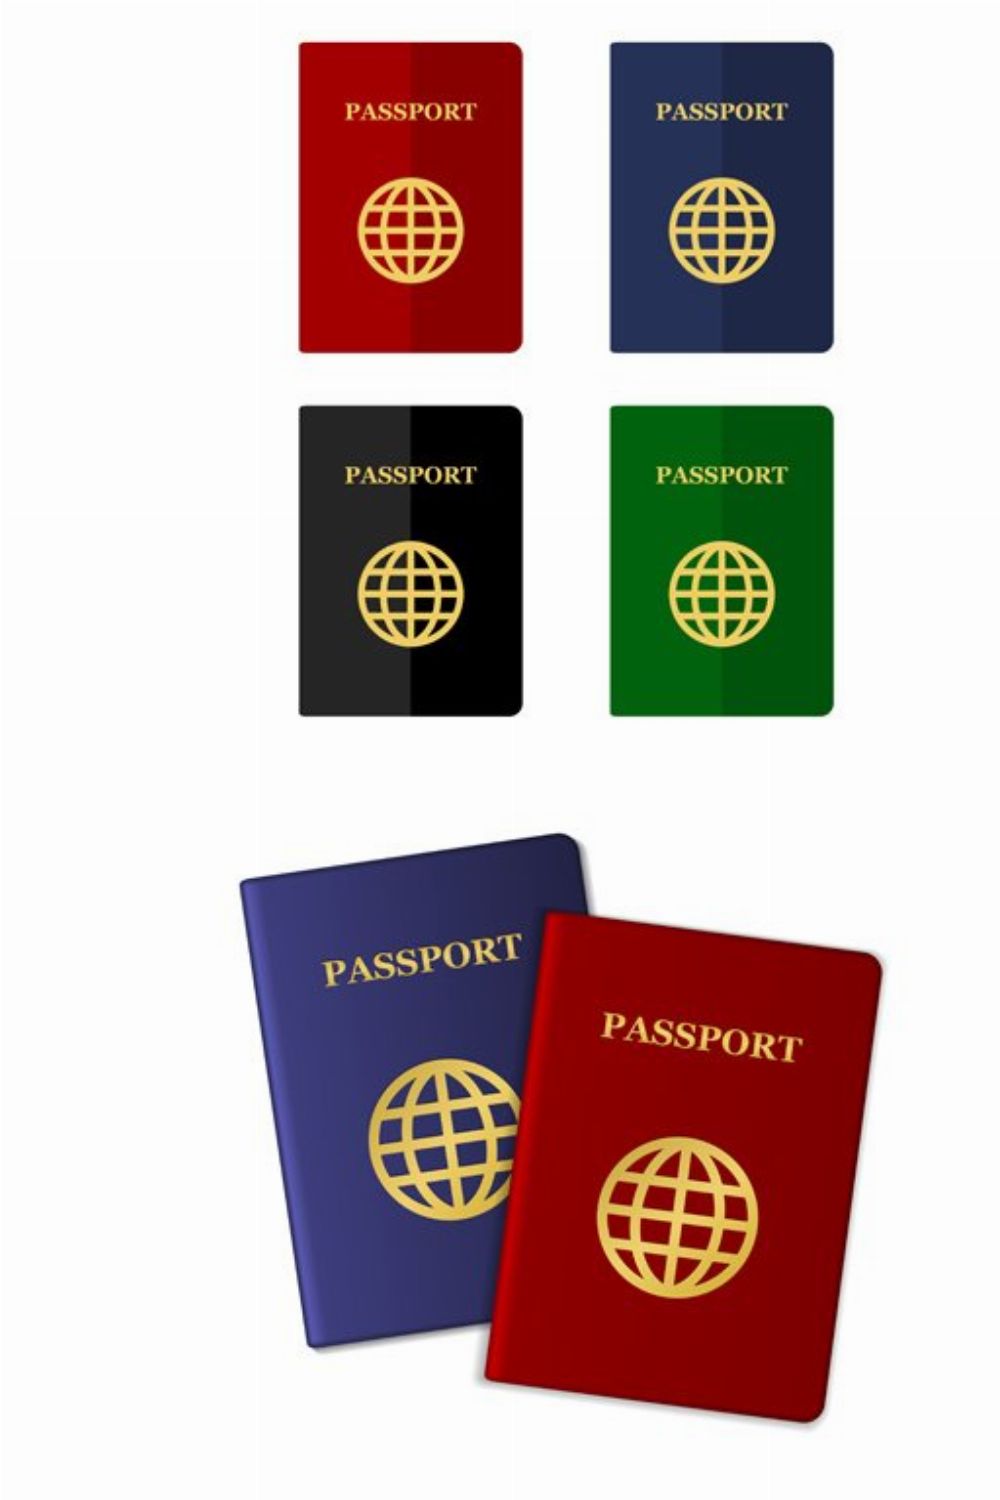 Color Passports Icons Set pinterest preview image.